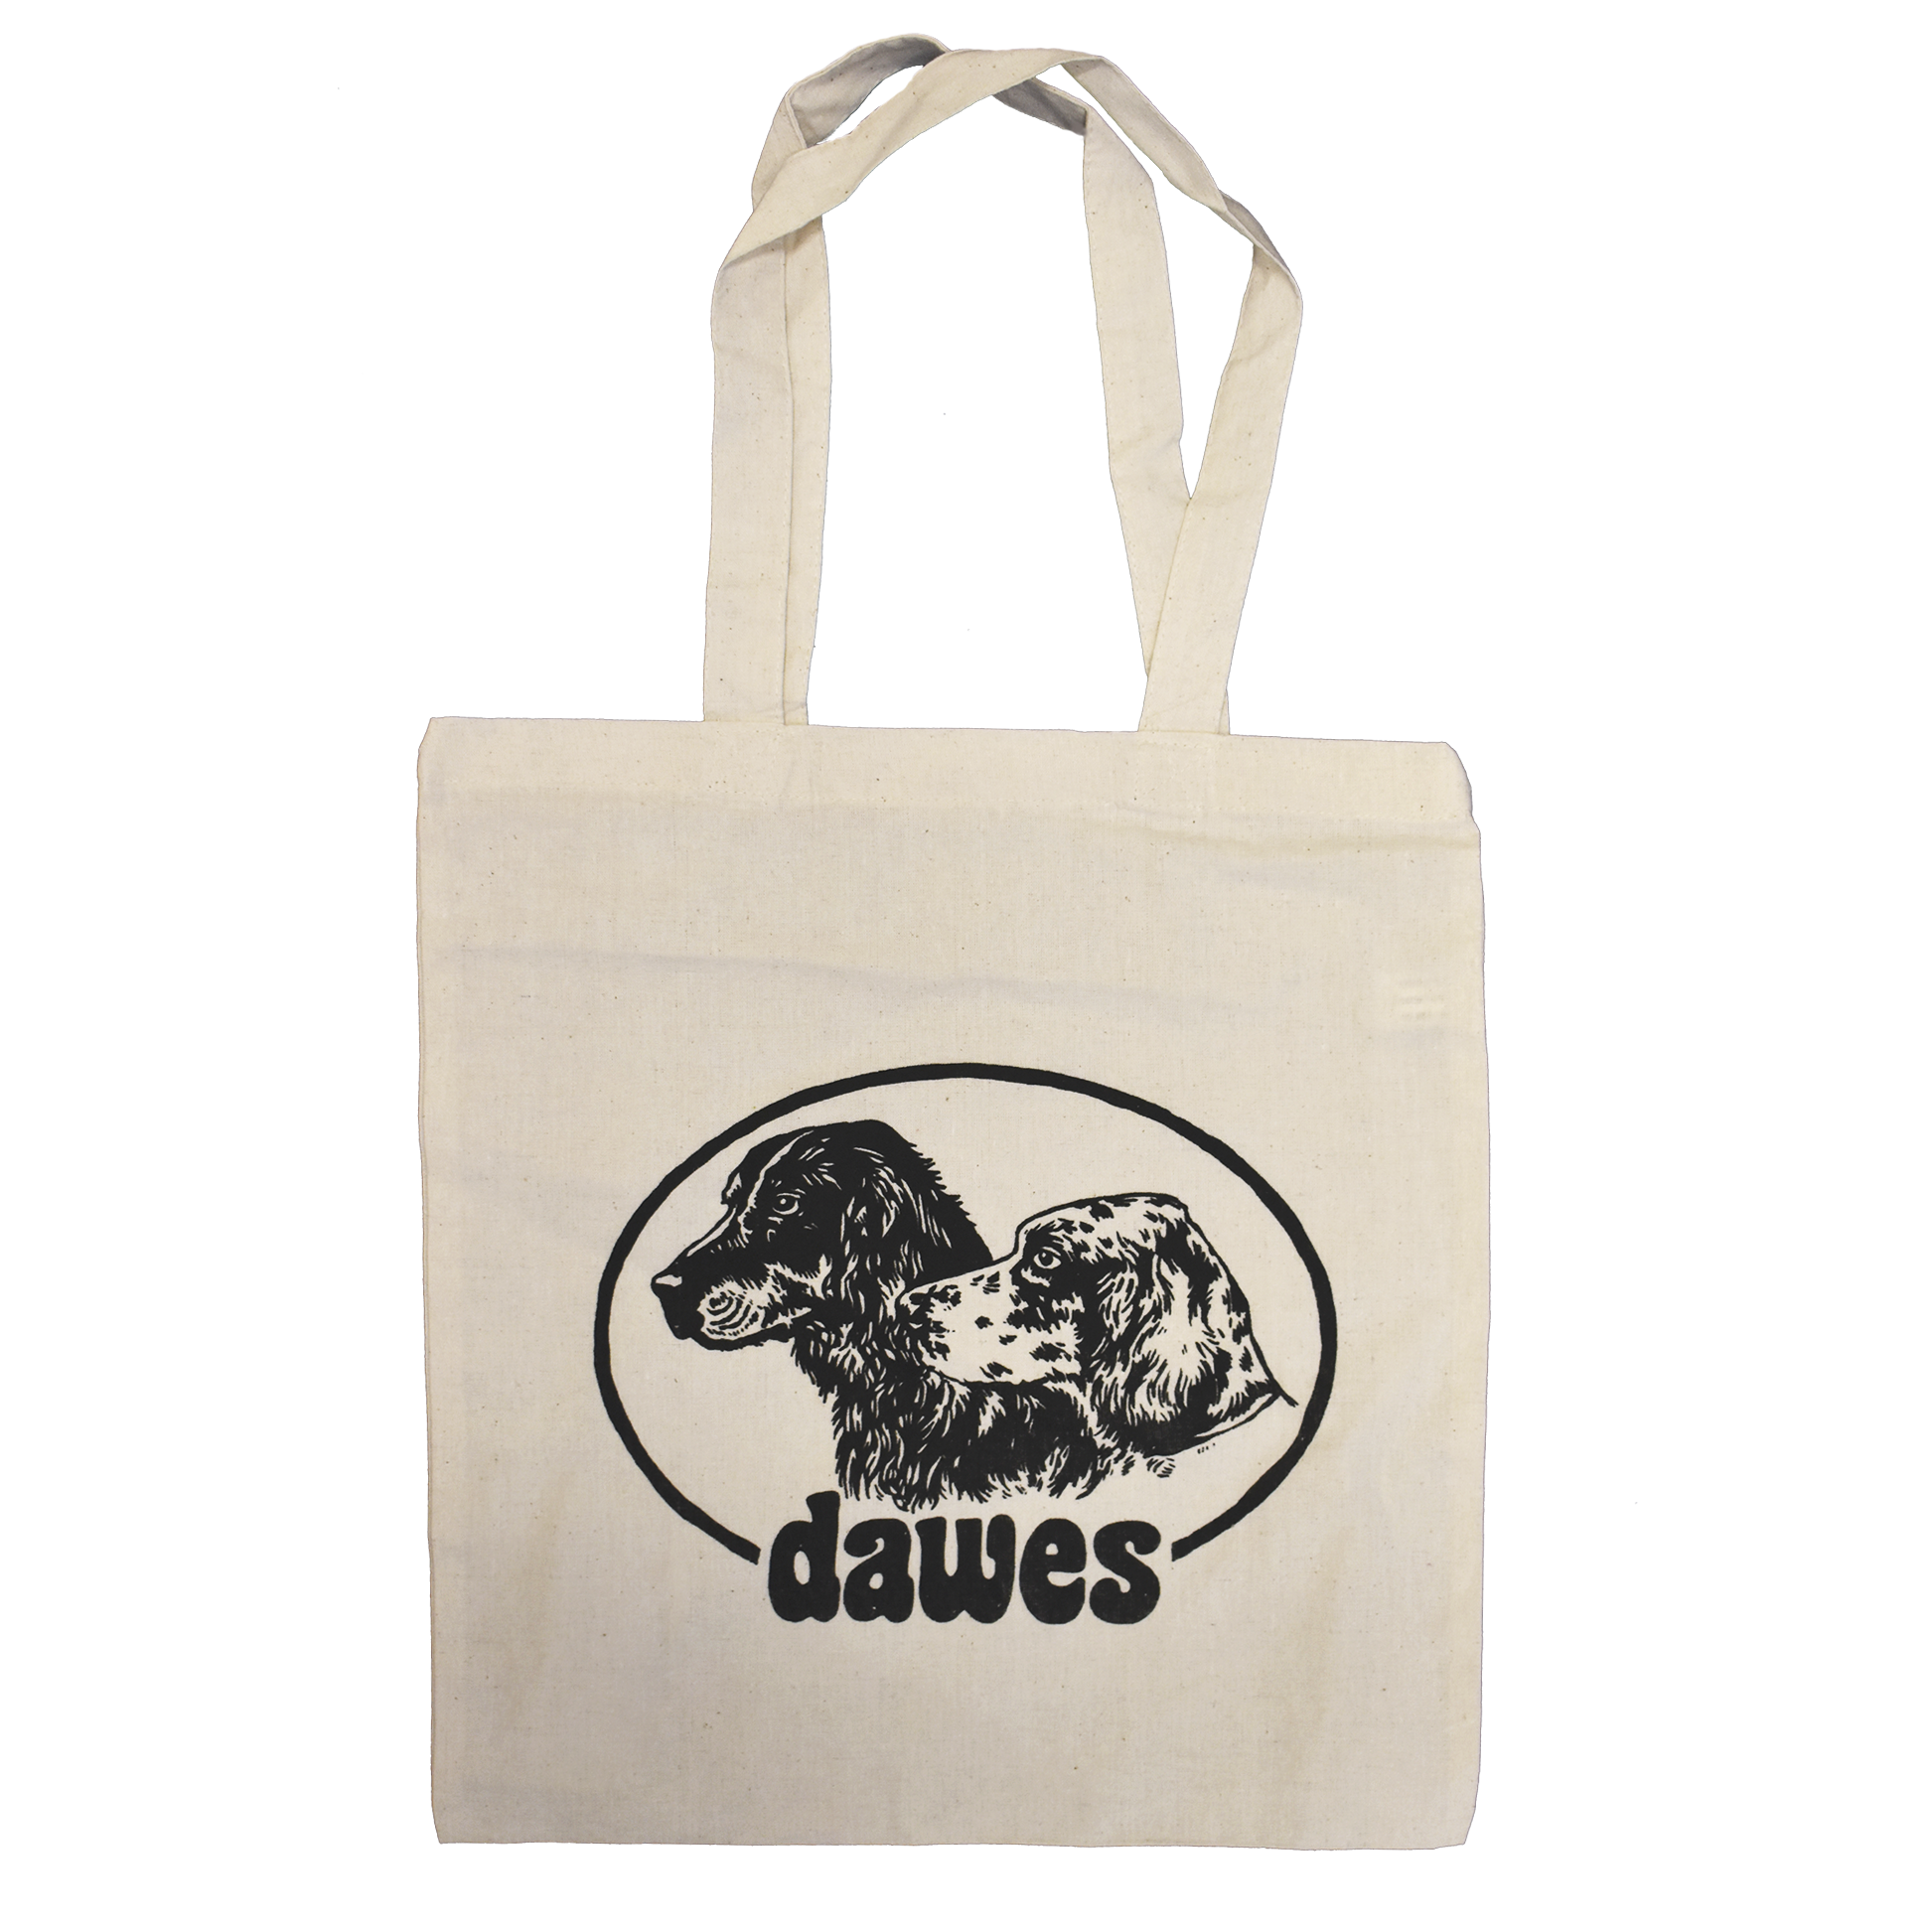 Dawes Logo Tote Bag